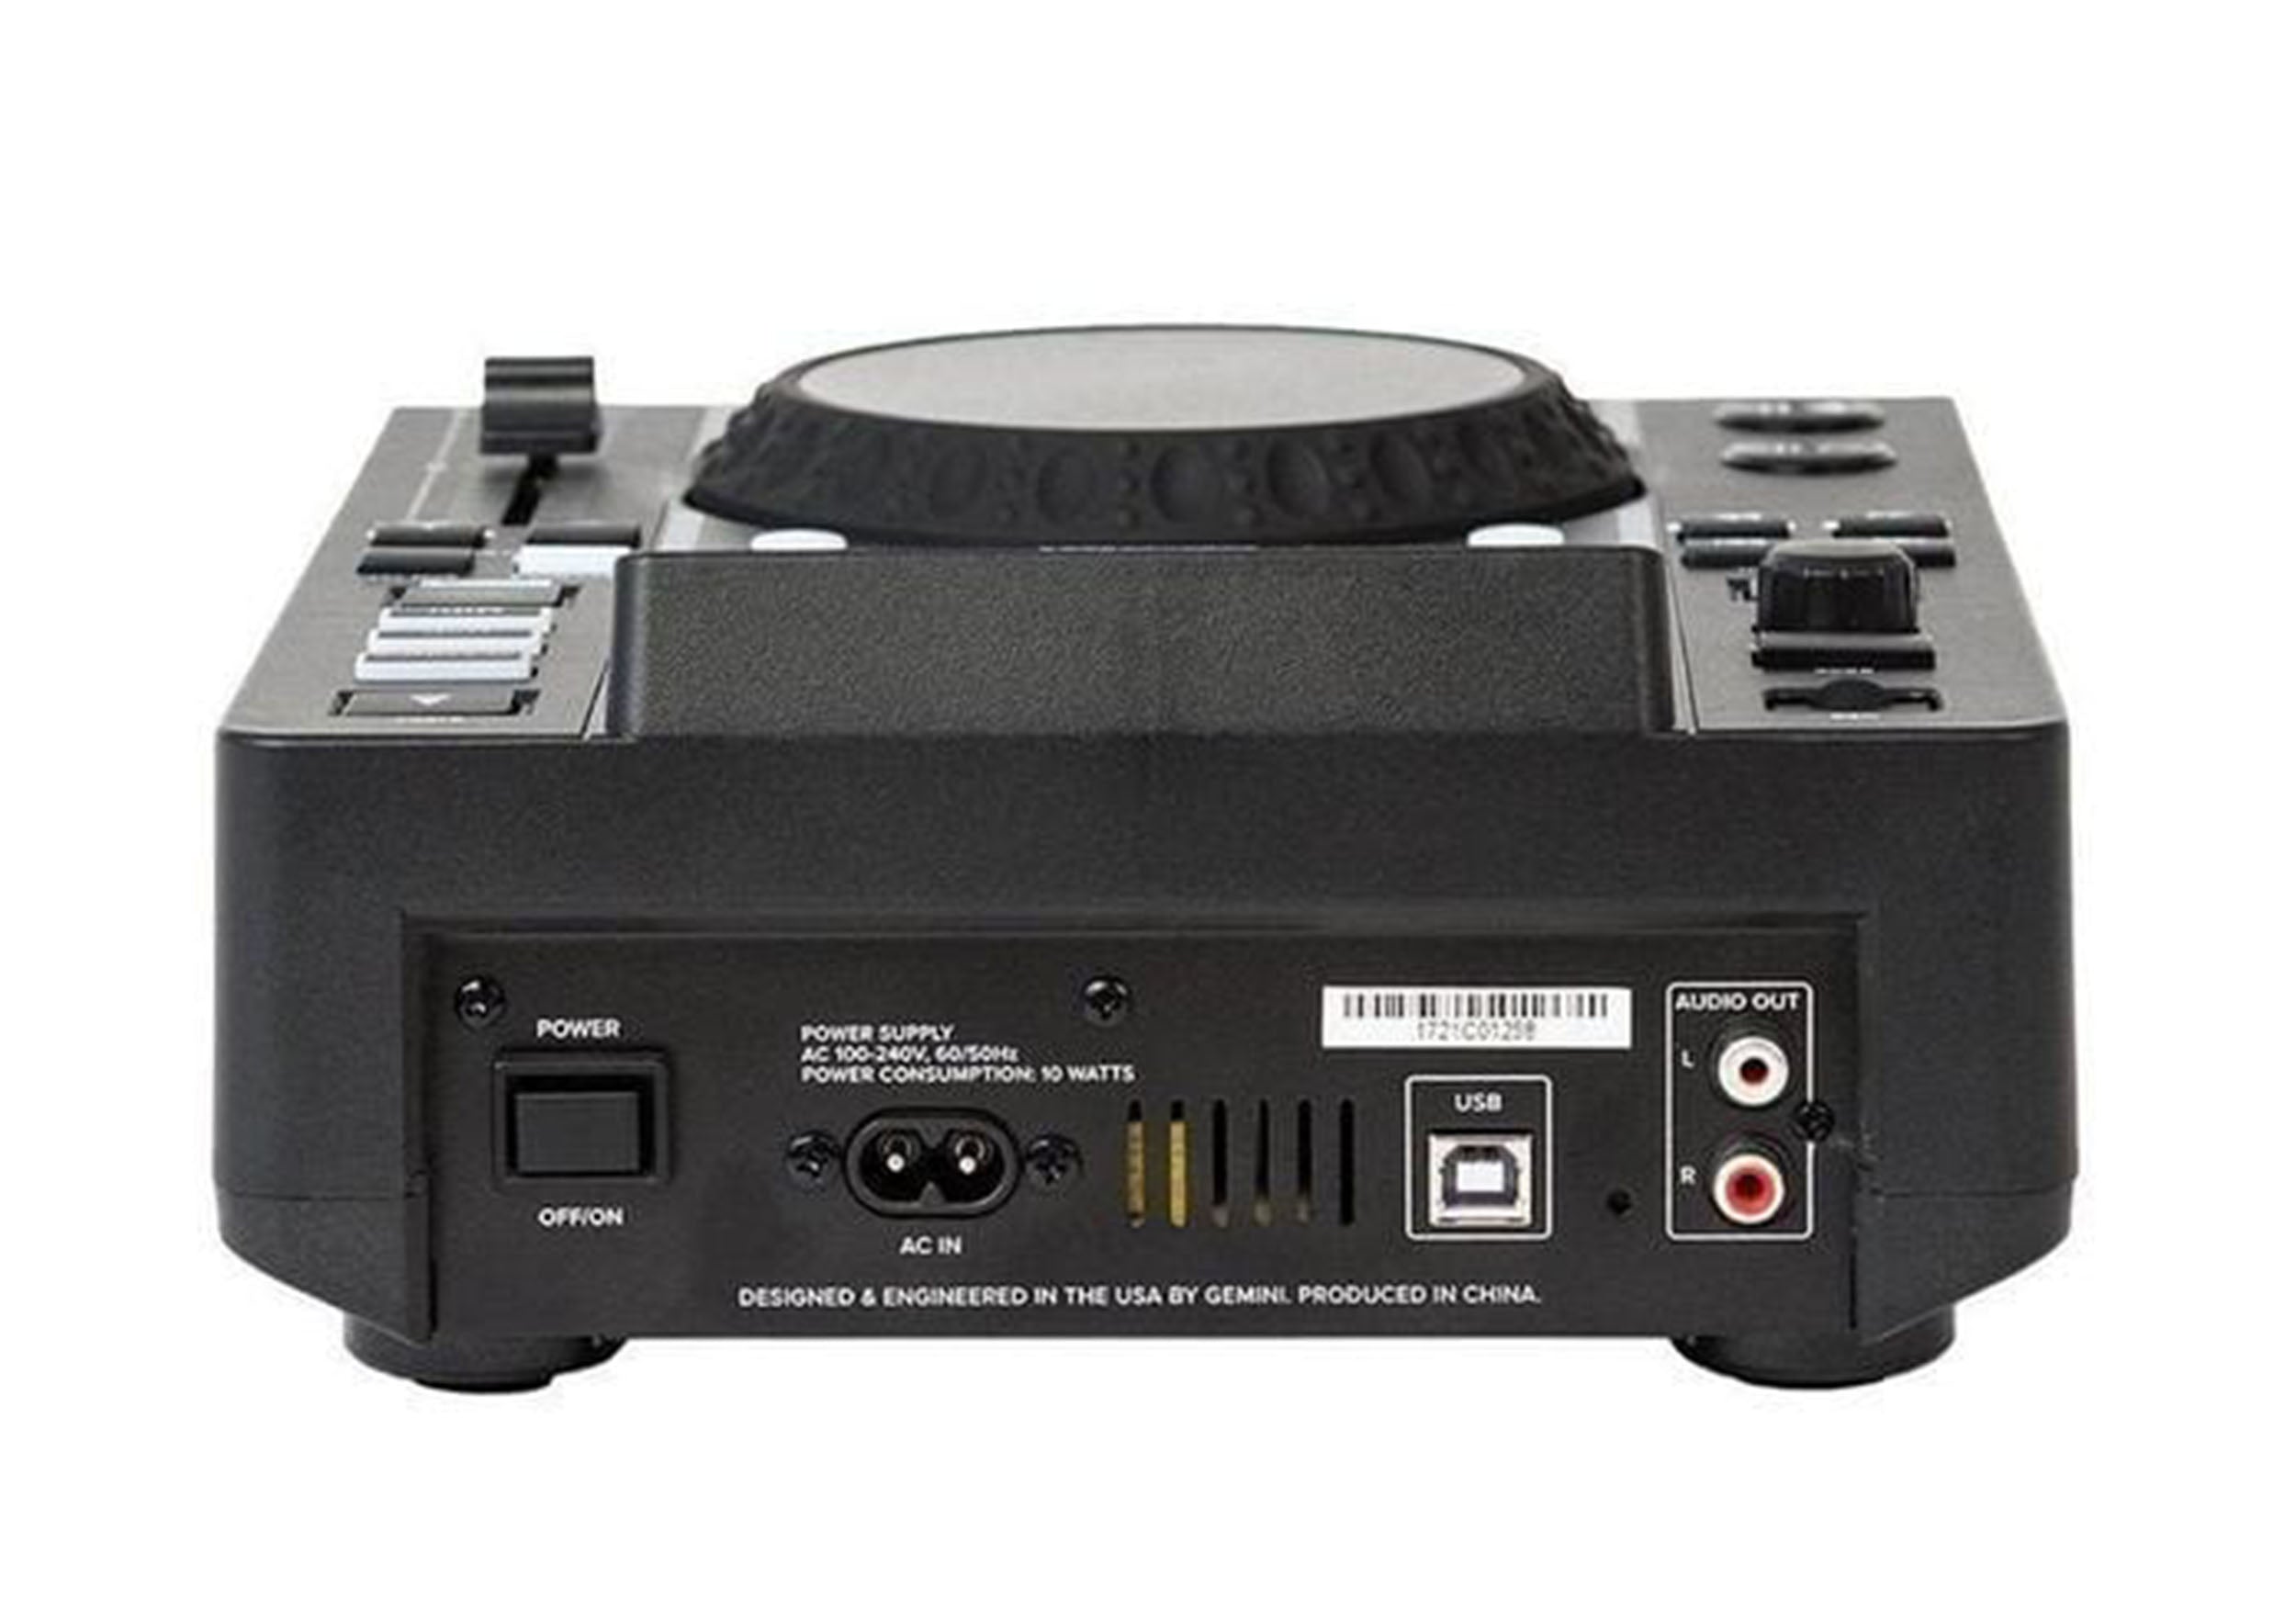 Gemini Sound MDJ-500 Professional Media Player - Hollywood DJ